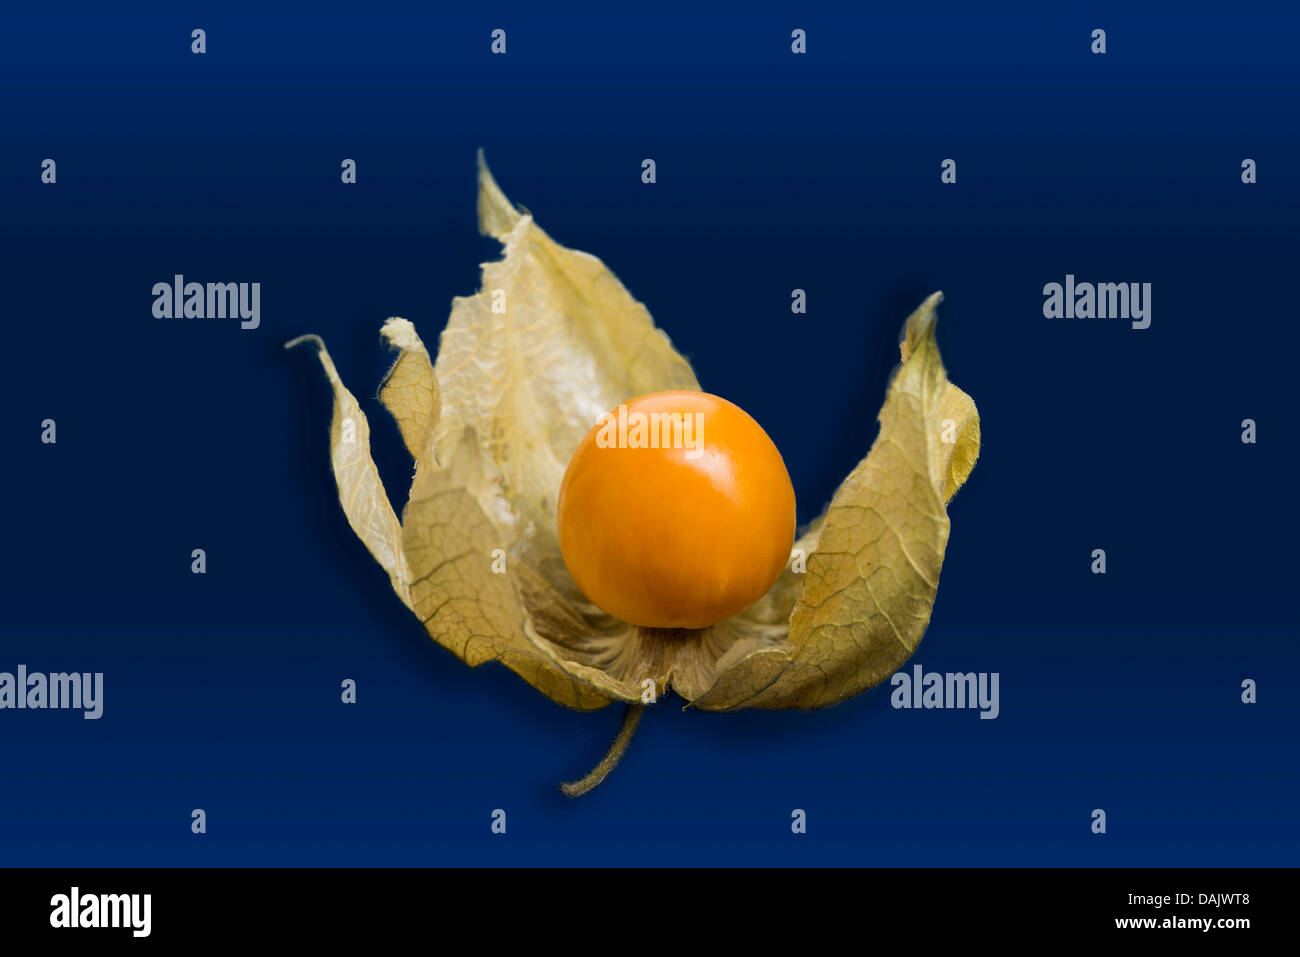 Linterna china fruta fotografías e imágenes de alta resolución - Alamy